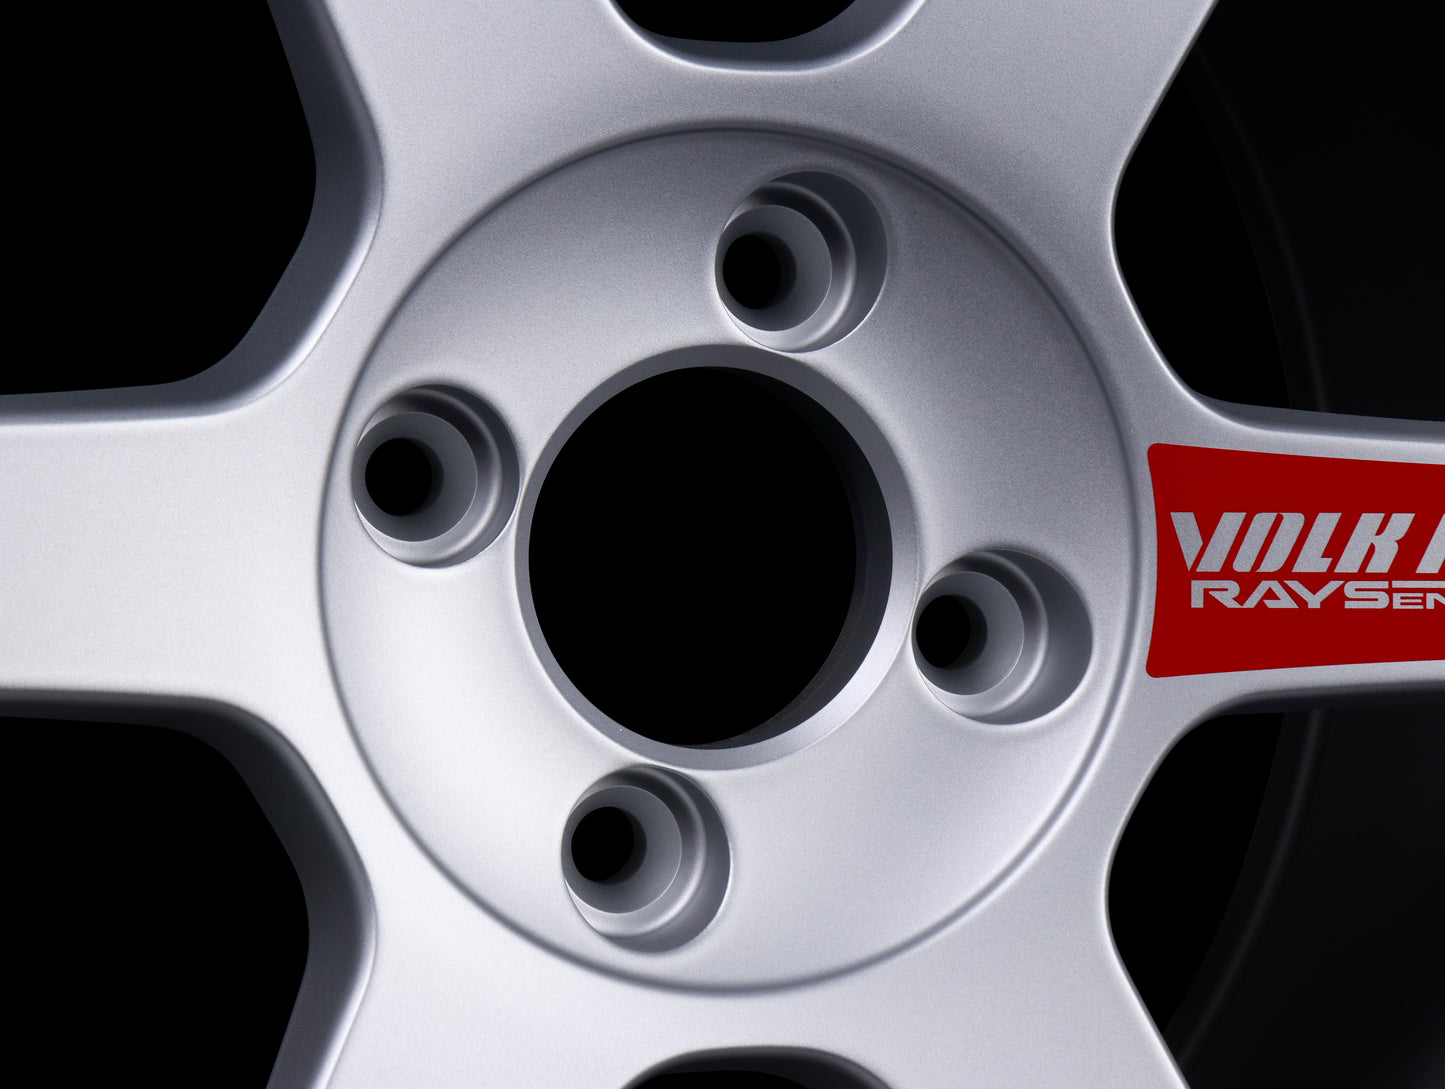 Volk Racing TE37SL Super Lap Edition - Titanium Silver 15x8.0 / 4x100 / +35